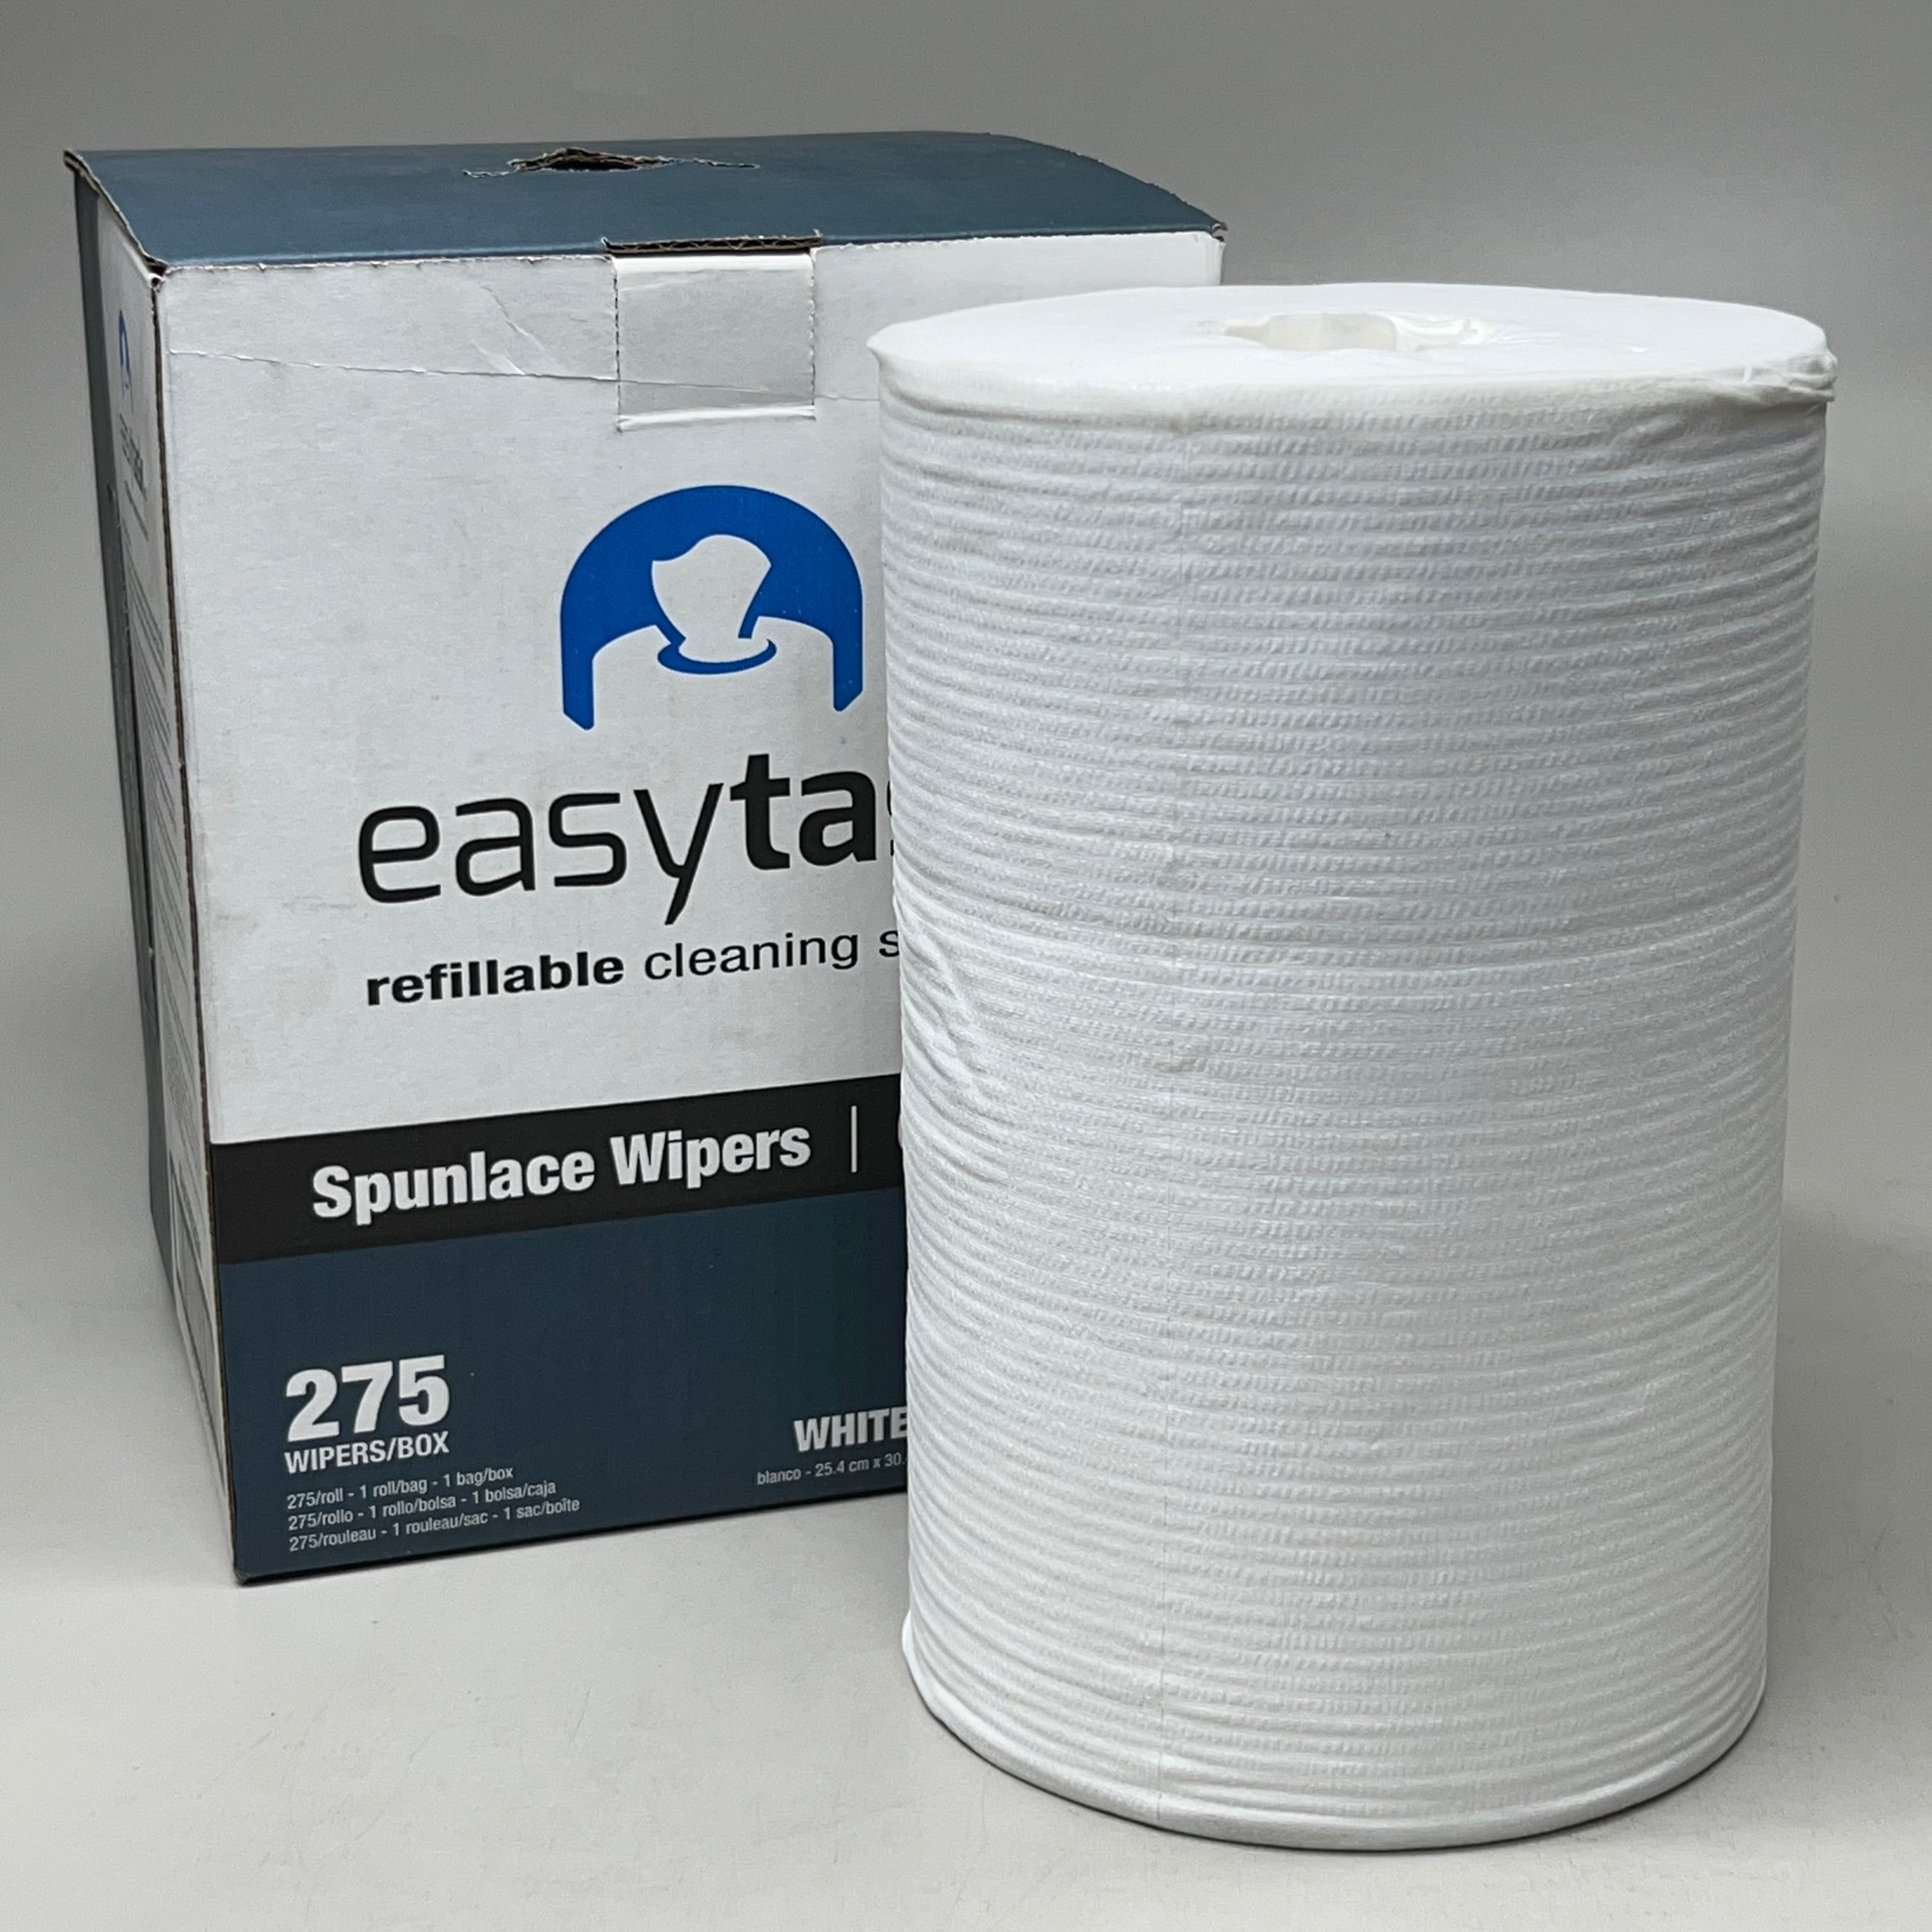 EASYTASK Spunlace Wipers 275 Per Box 10